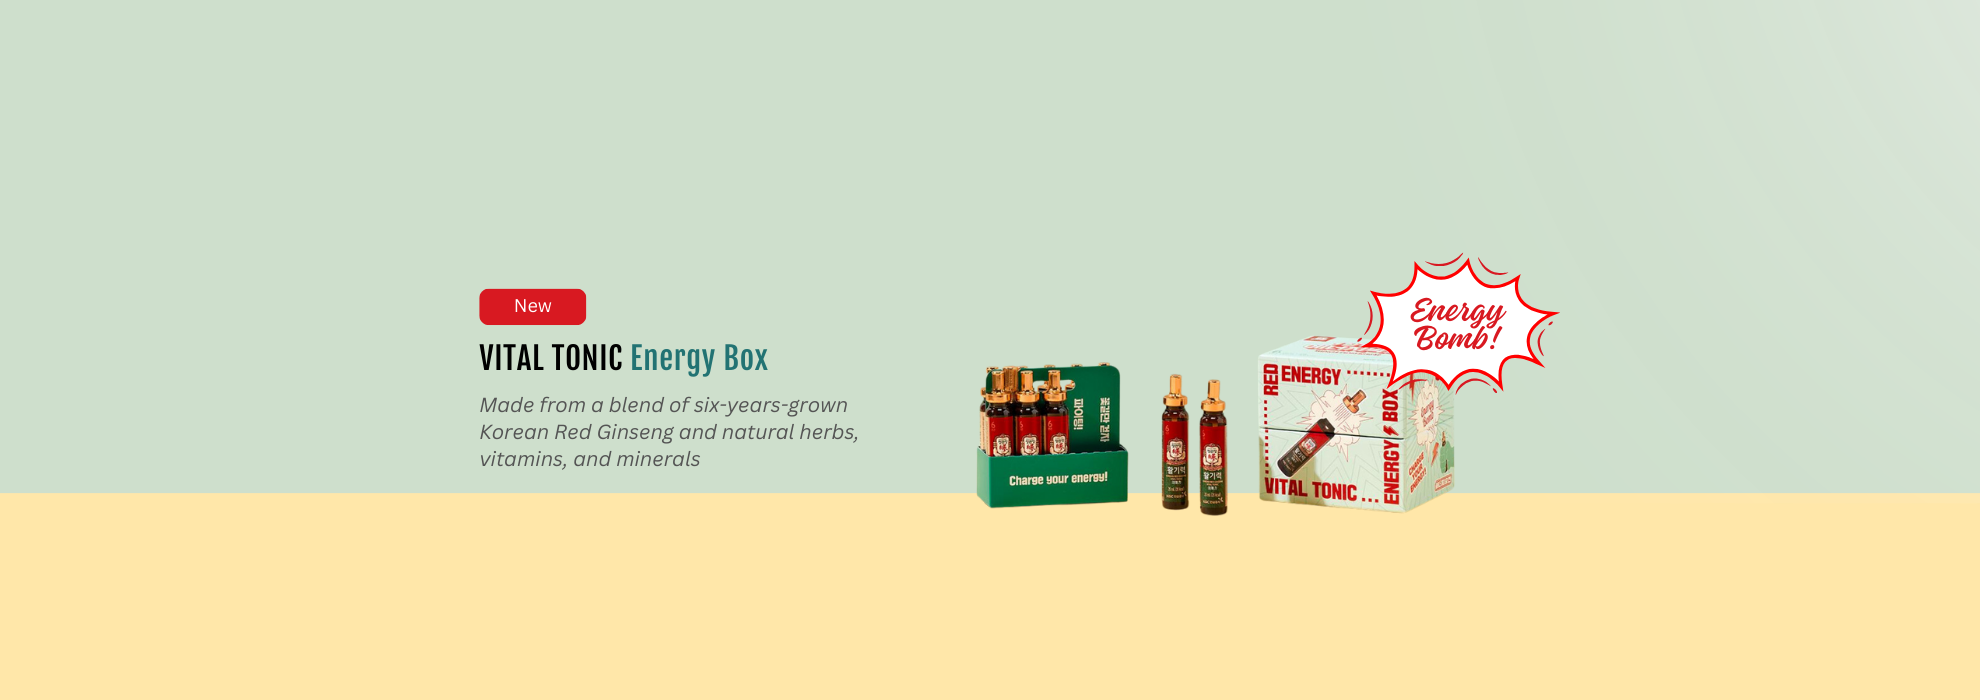 Vital Tonic Energy Box